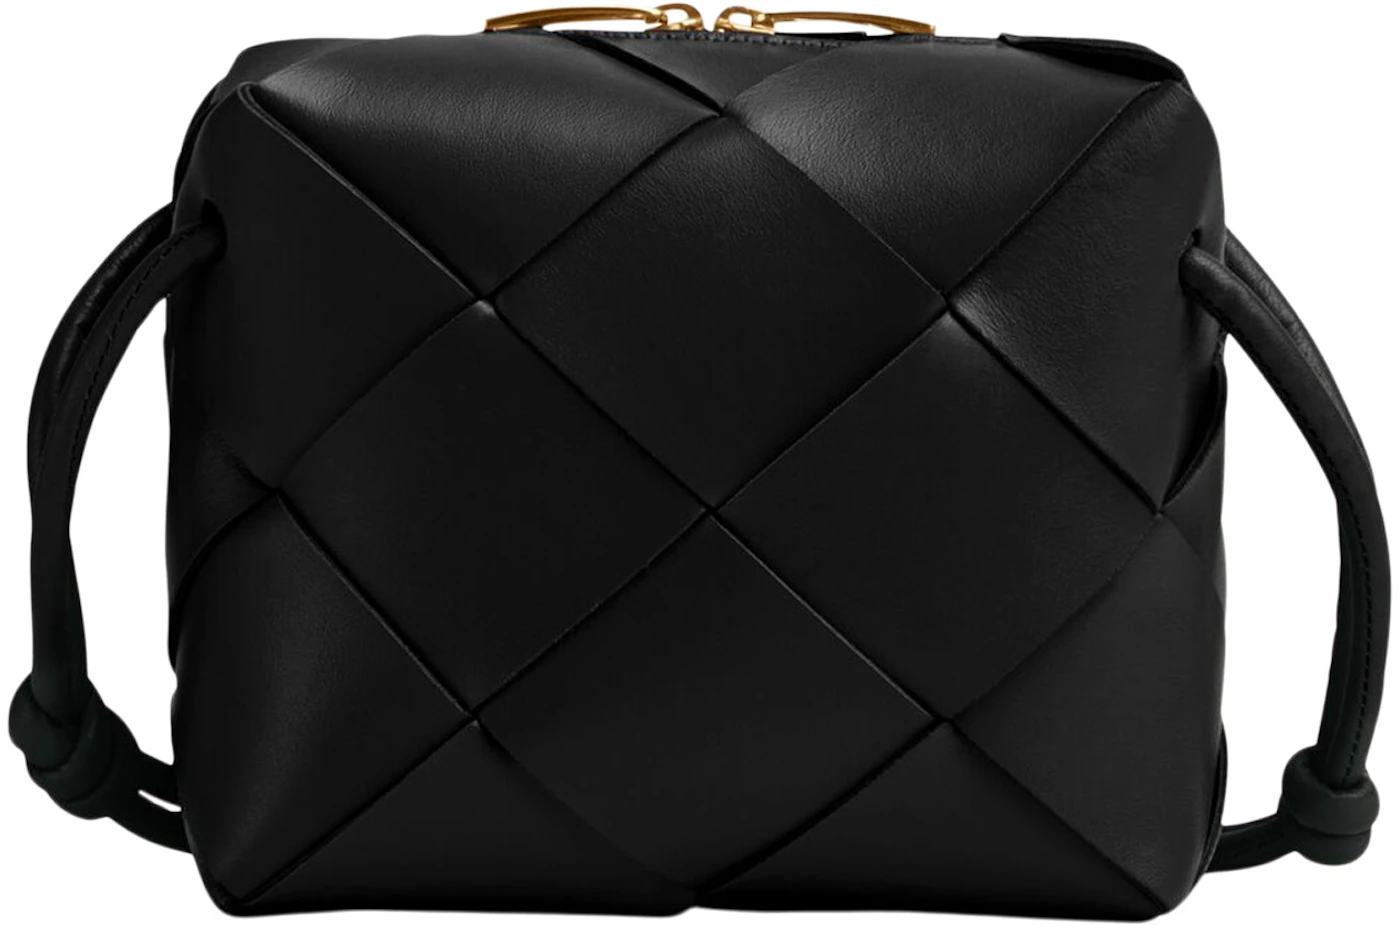 Bottega Veneta® Mini Cassette Tote Bag in Black. Shop online now.